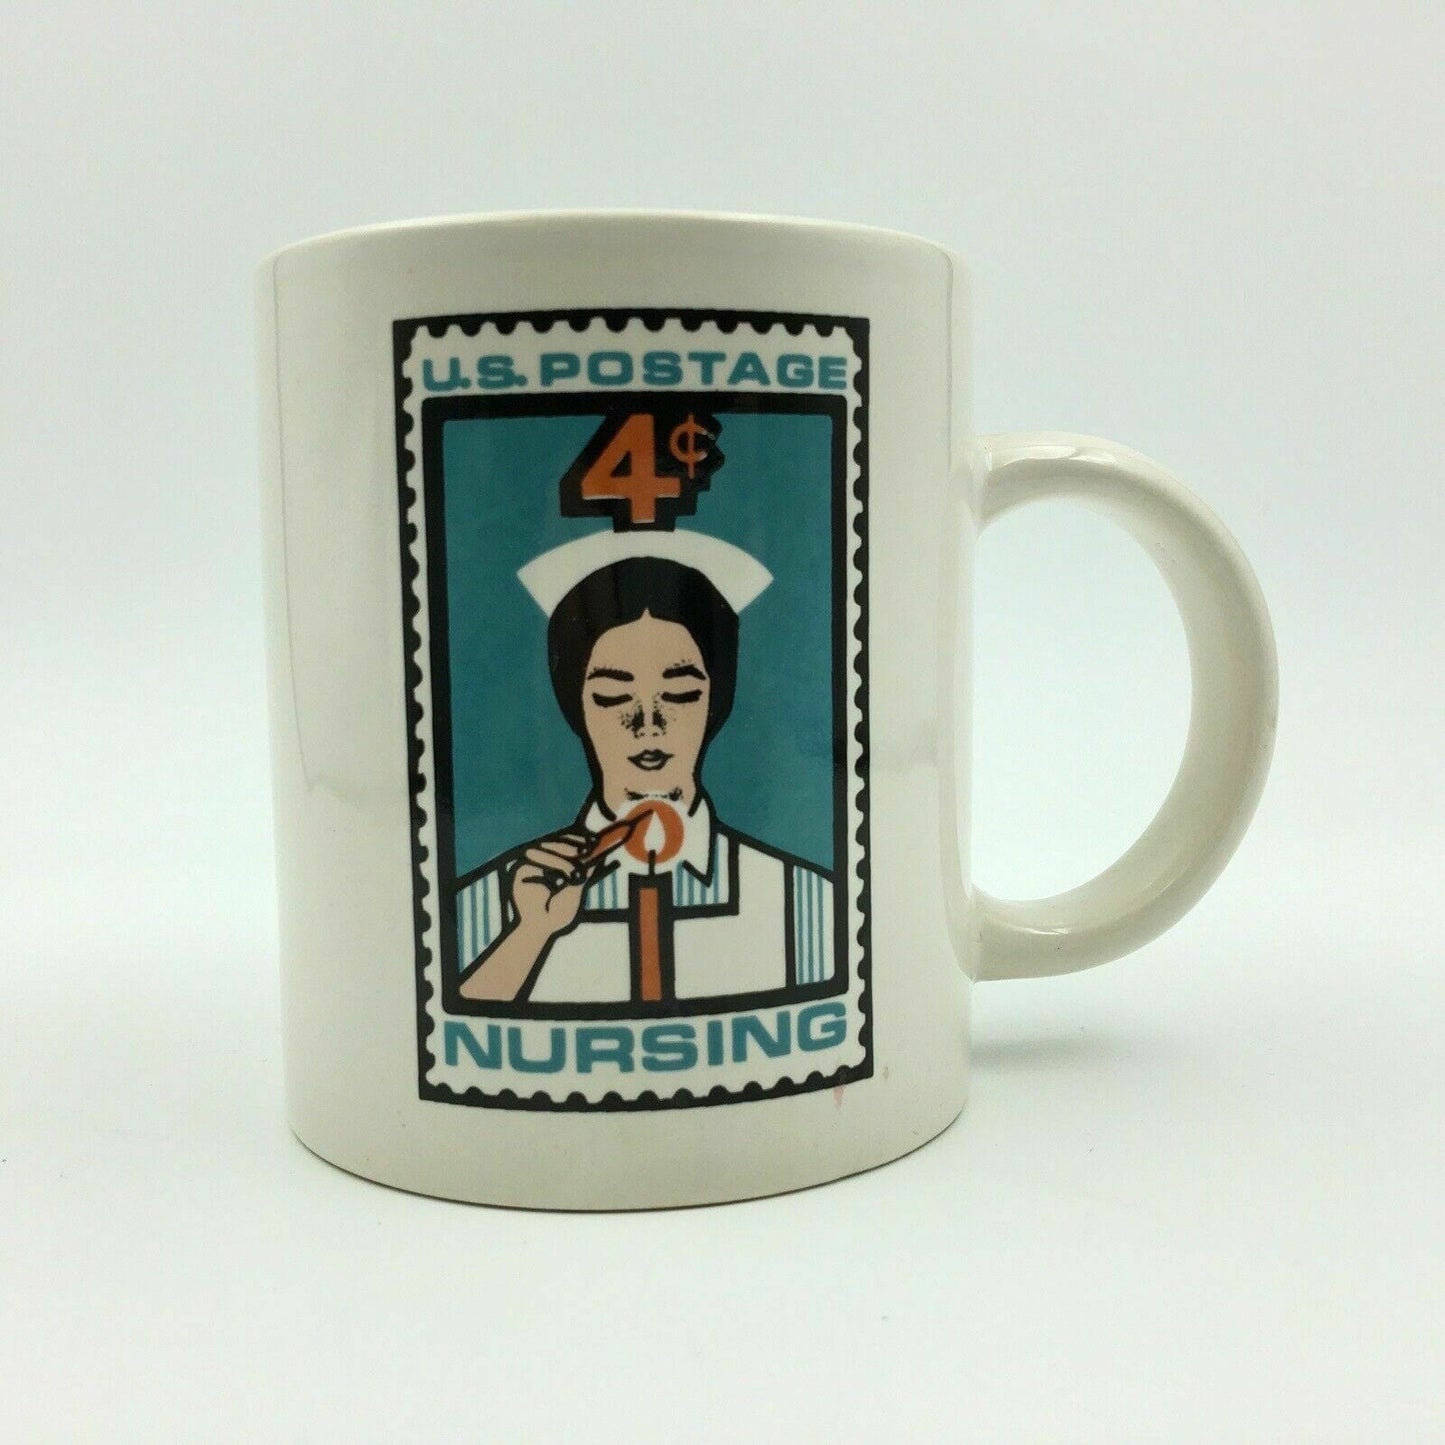 Vintage Nursing Coffee Cup - Elegant White Porcelain - Nostalgic Collectible - Very Good Condition